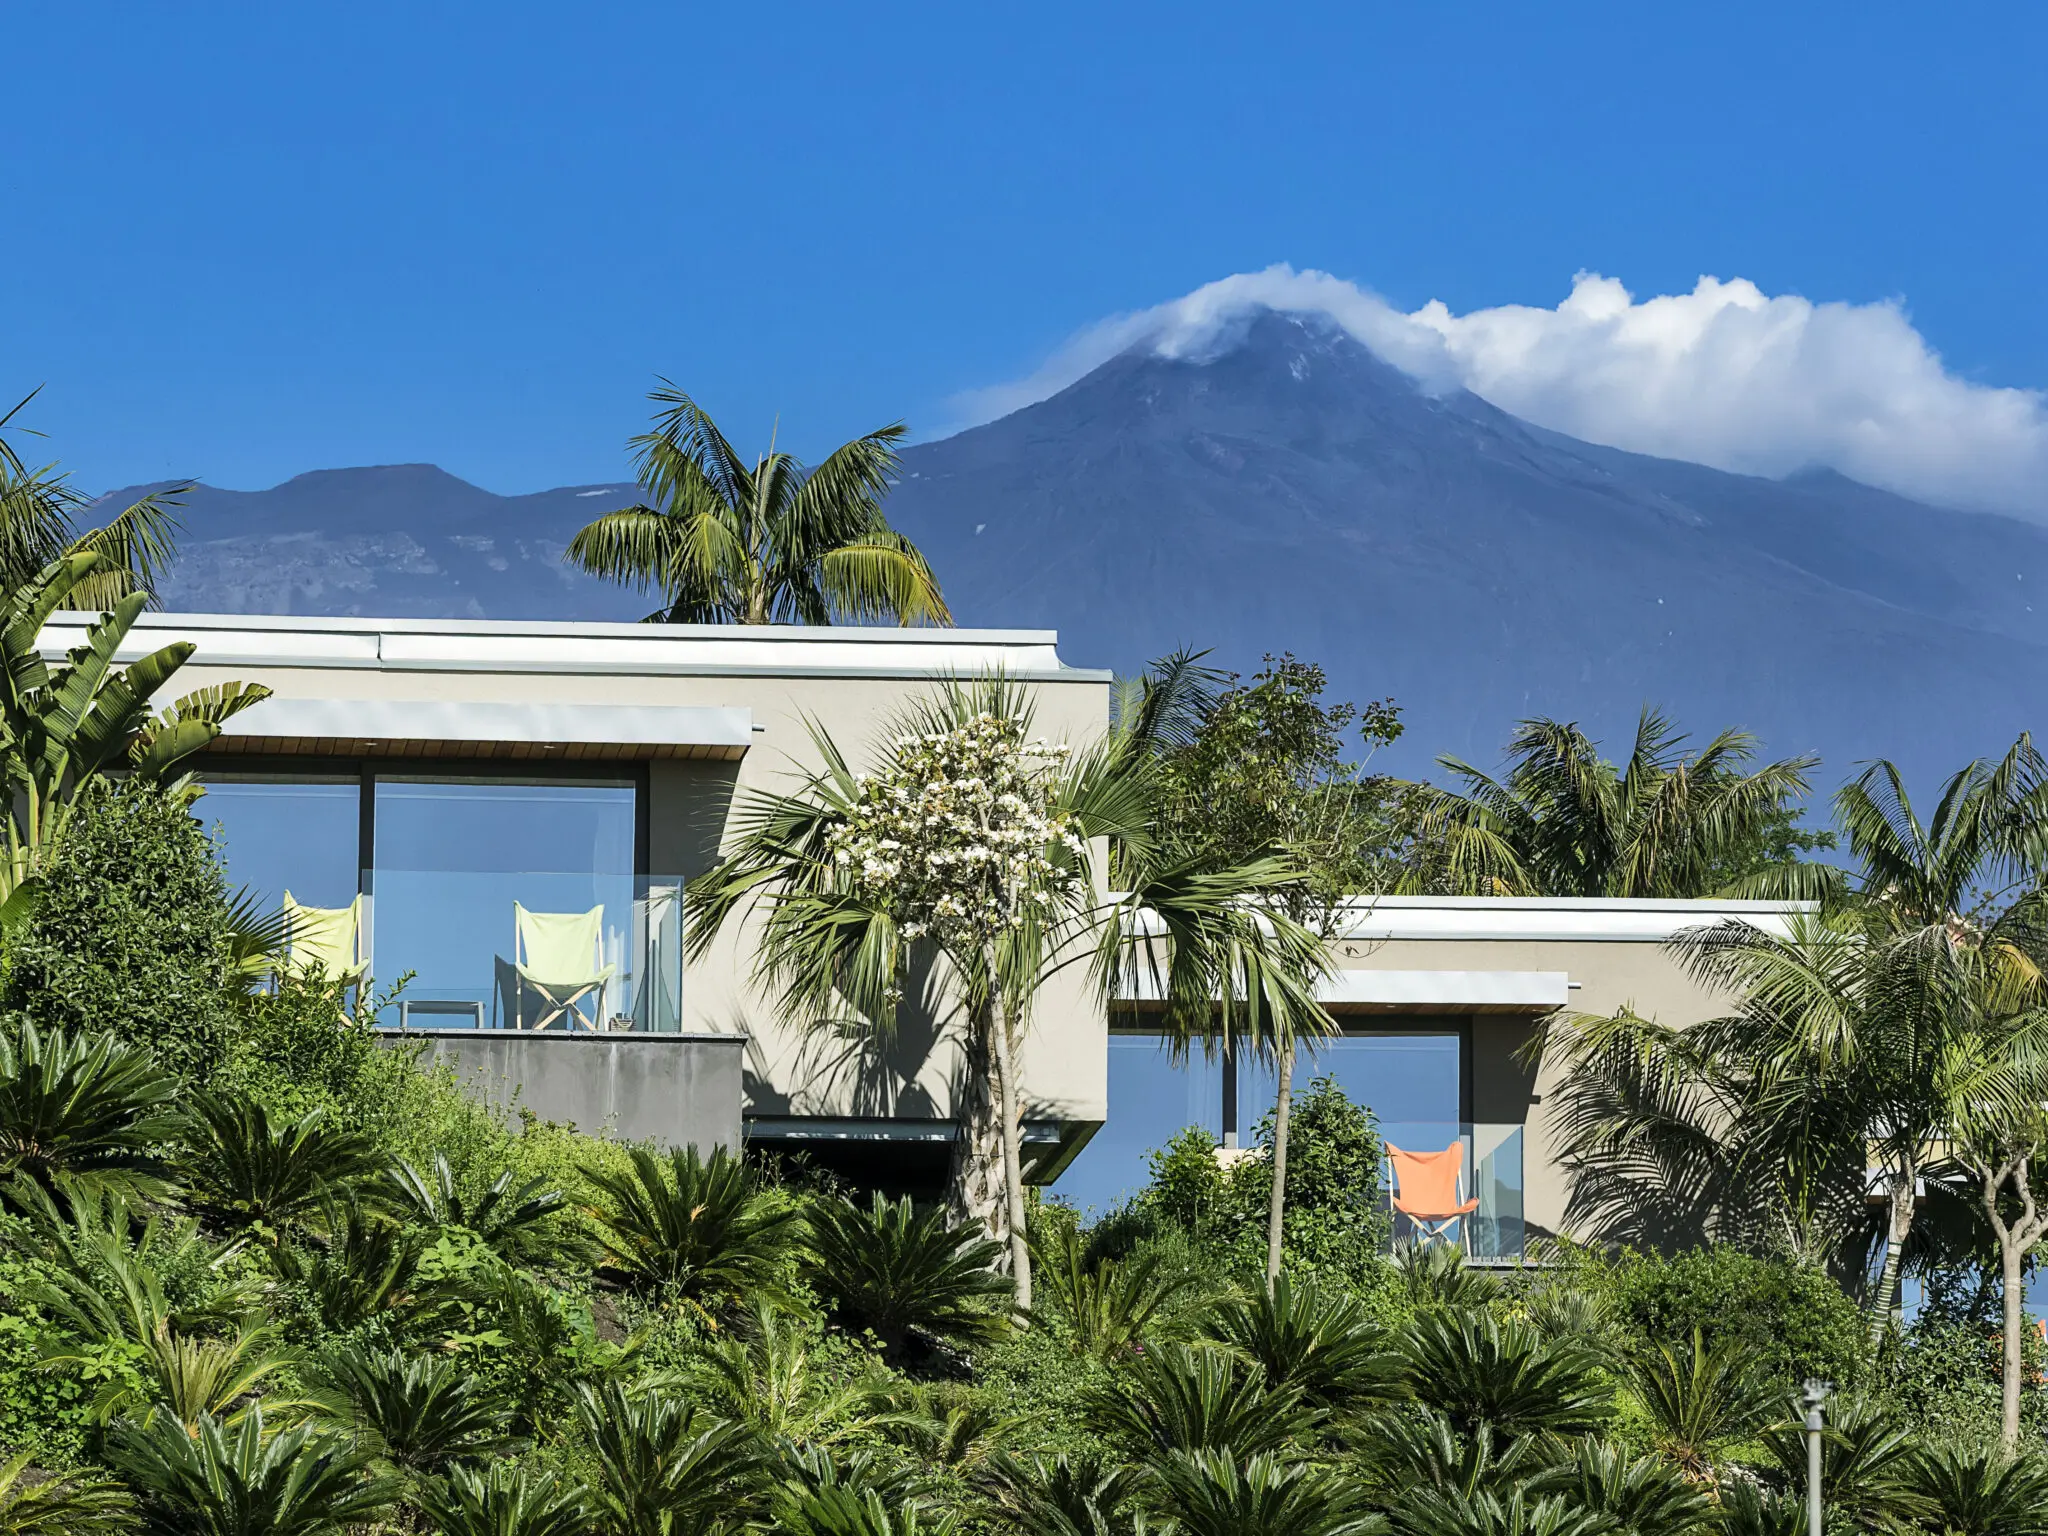 Nest Italy: Boutique Resort & Lodges near Etna